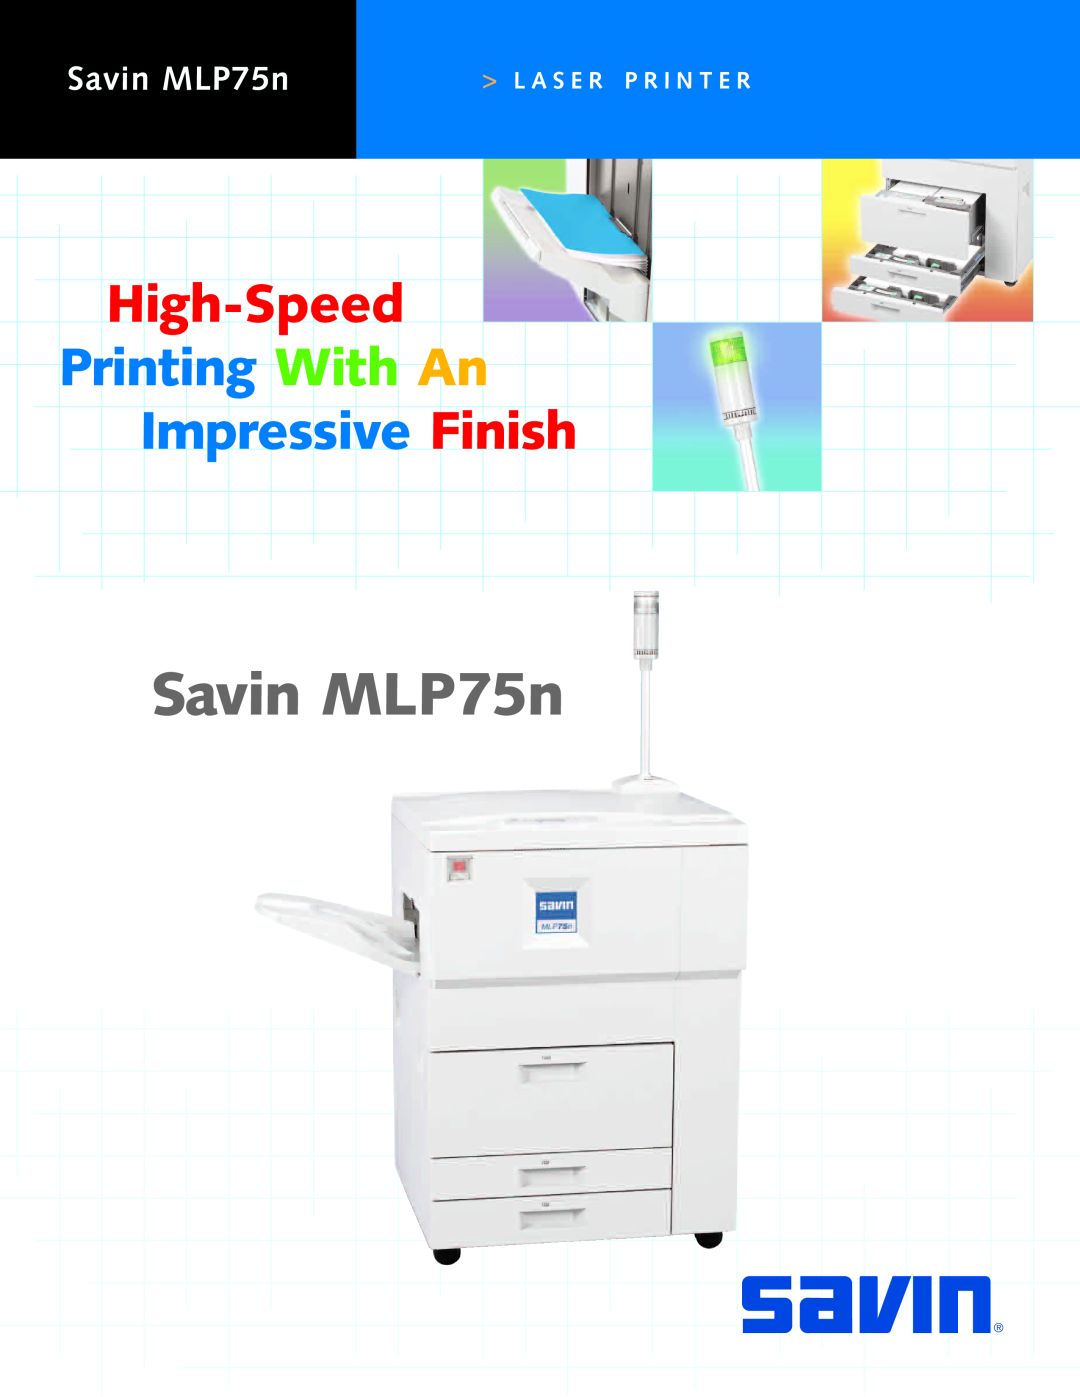 Savin MLP75N manual Savin MLP75n, High-Speed, Printing With An Impressive Finish, L A S E R P R I N T E R 